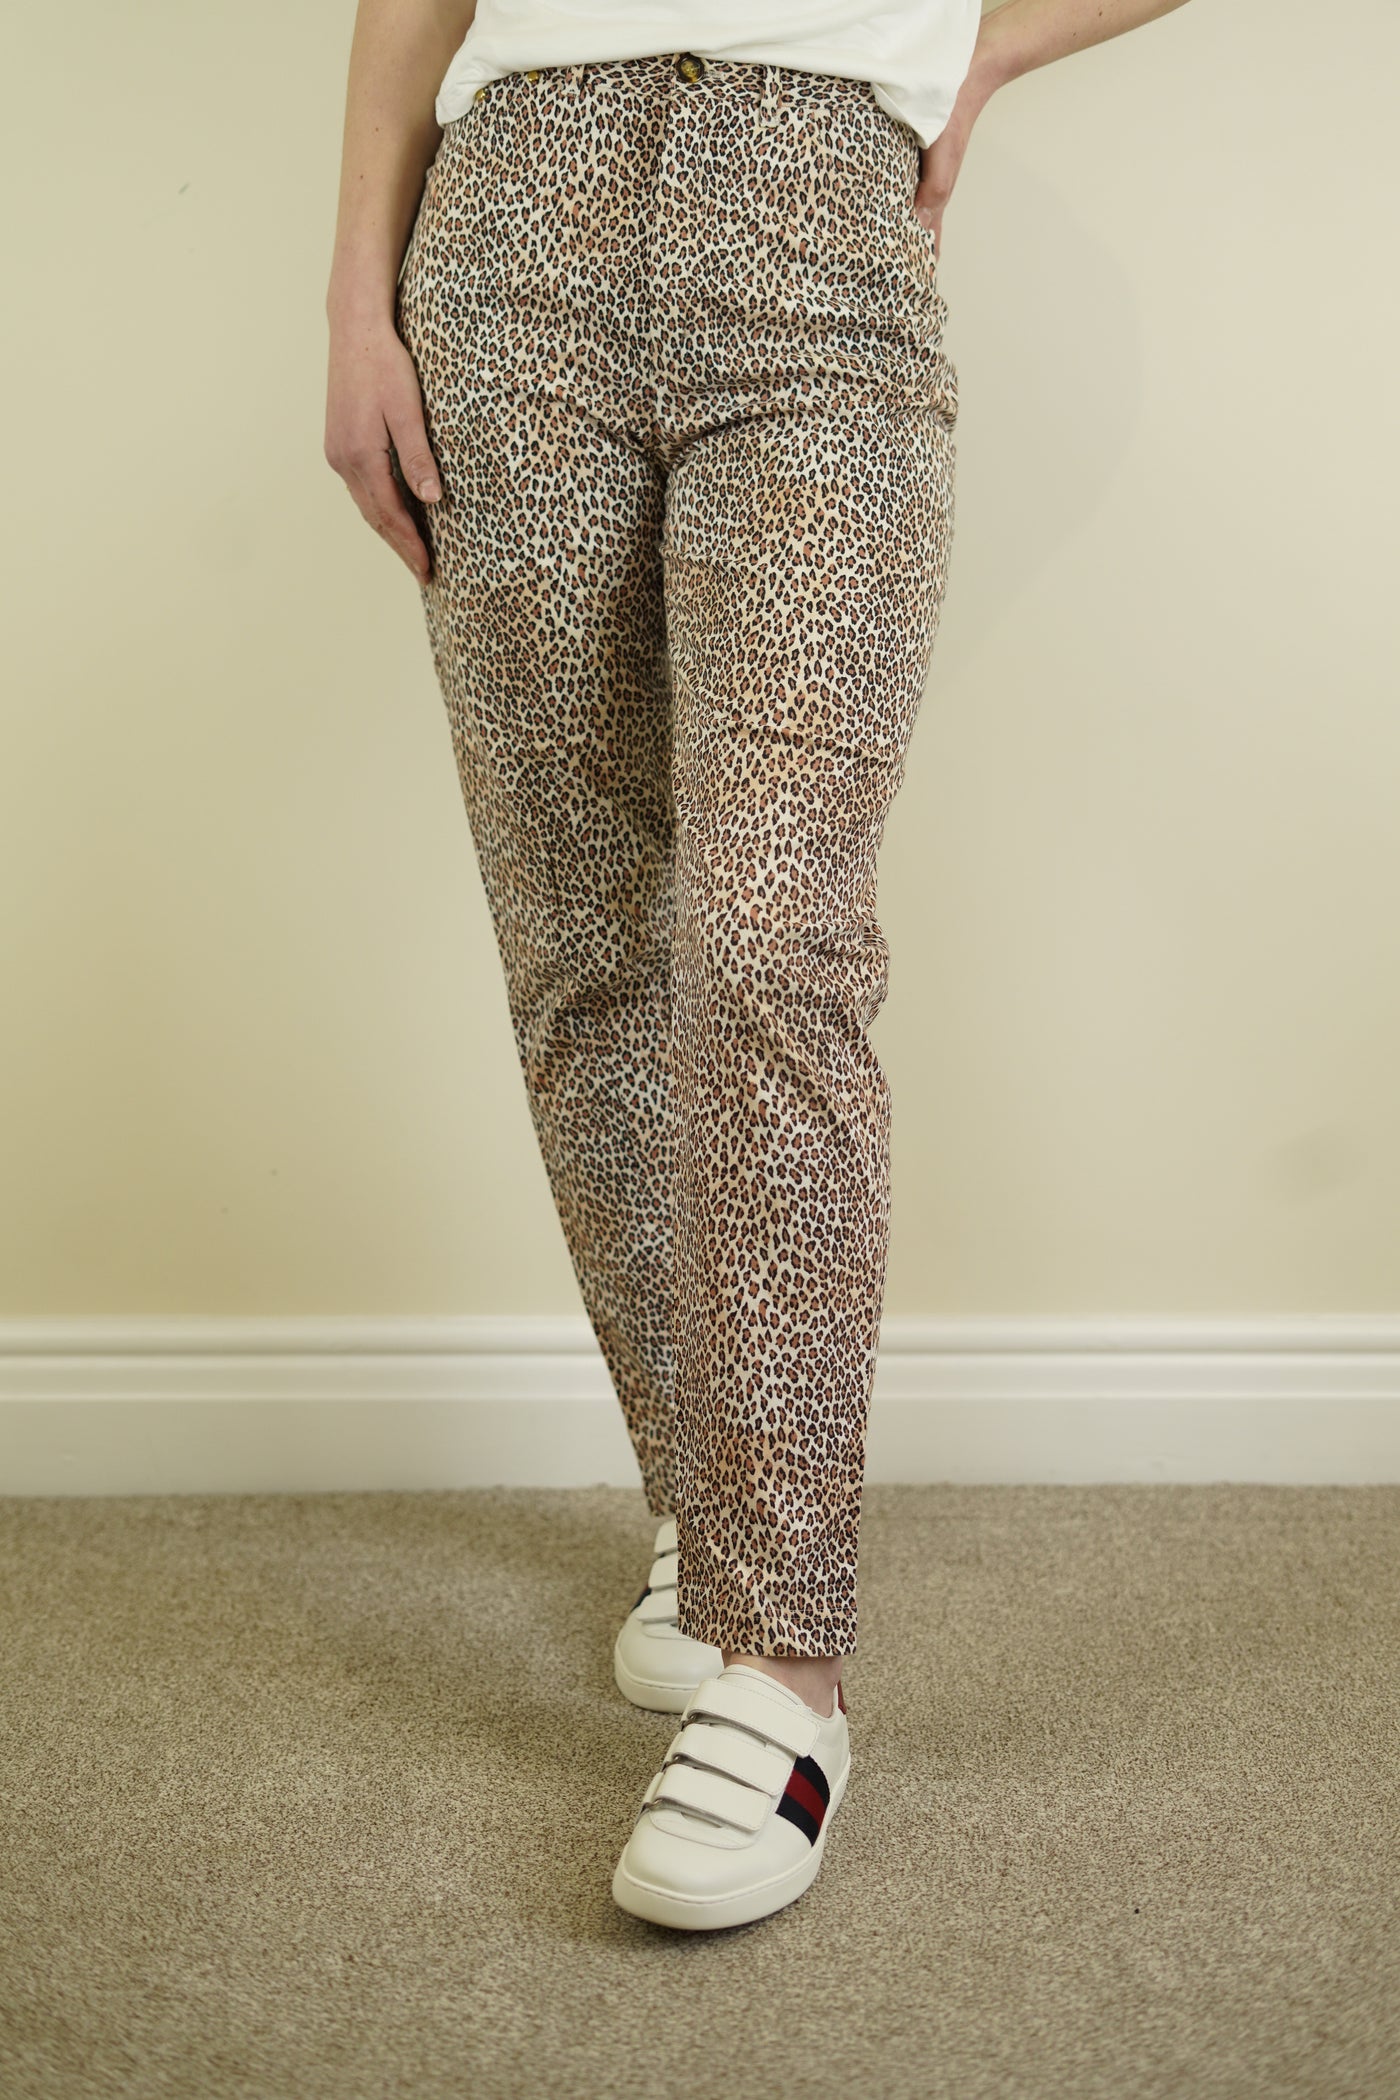 betty barclay leopard print jeans size 40